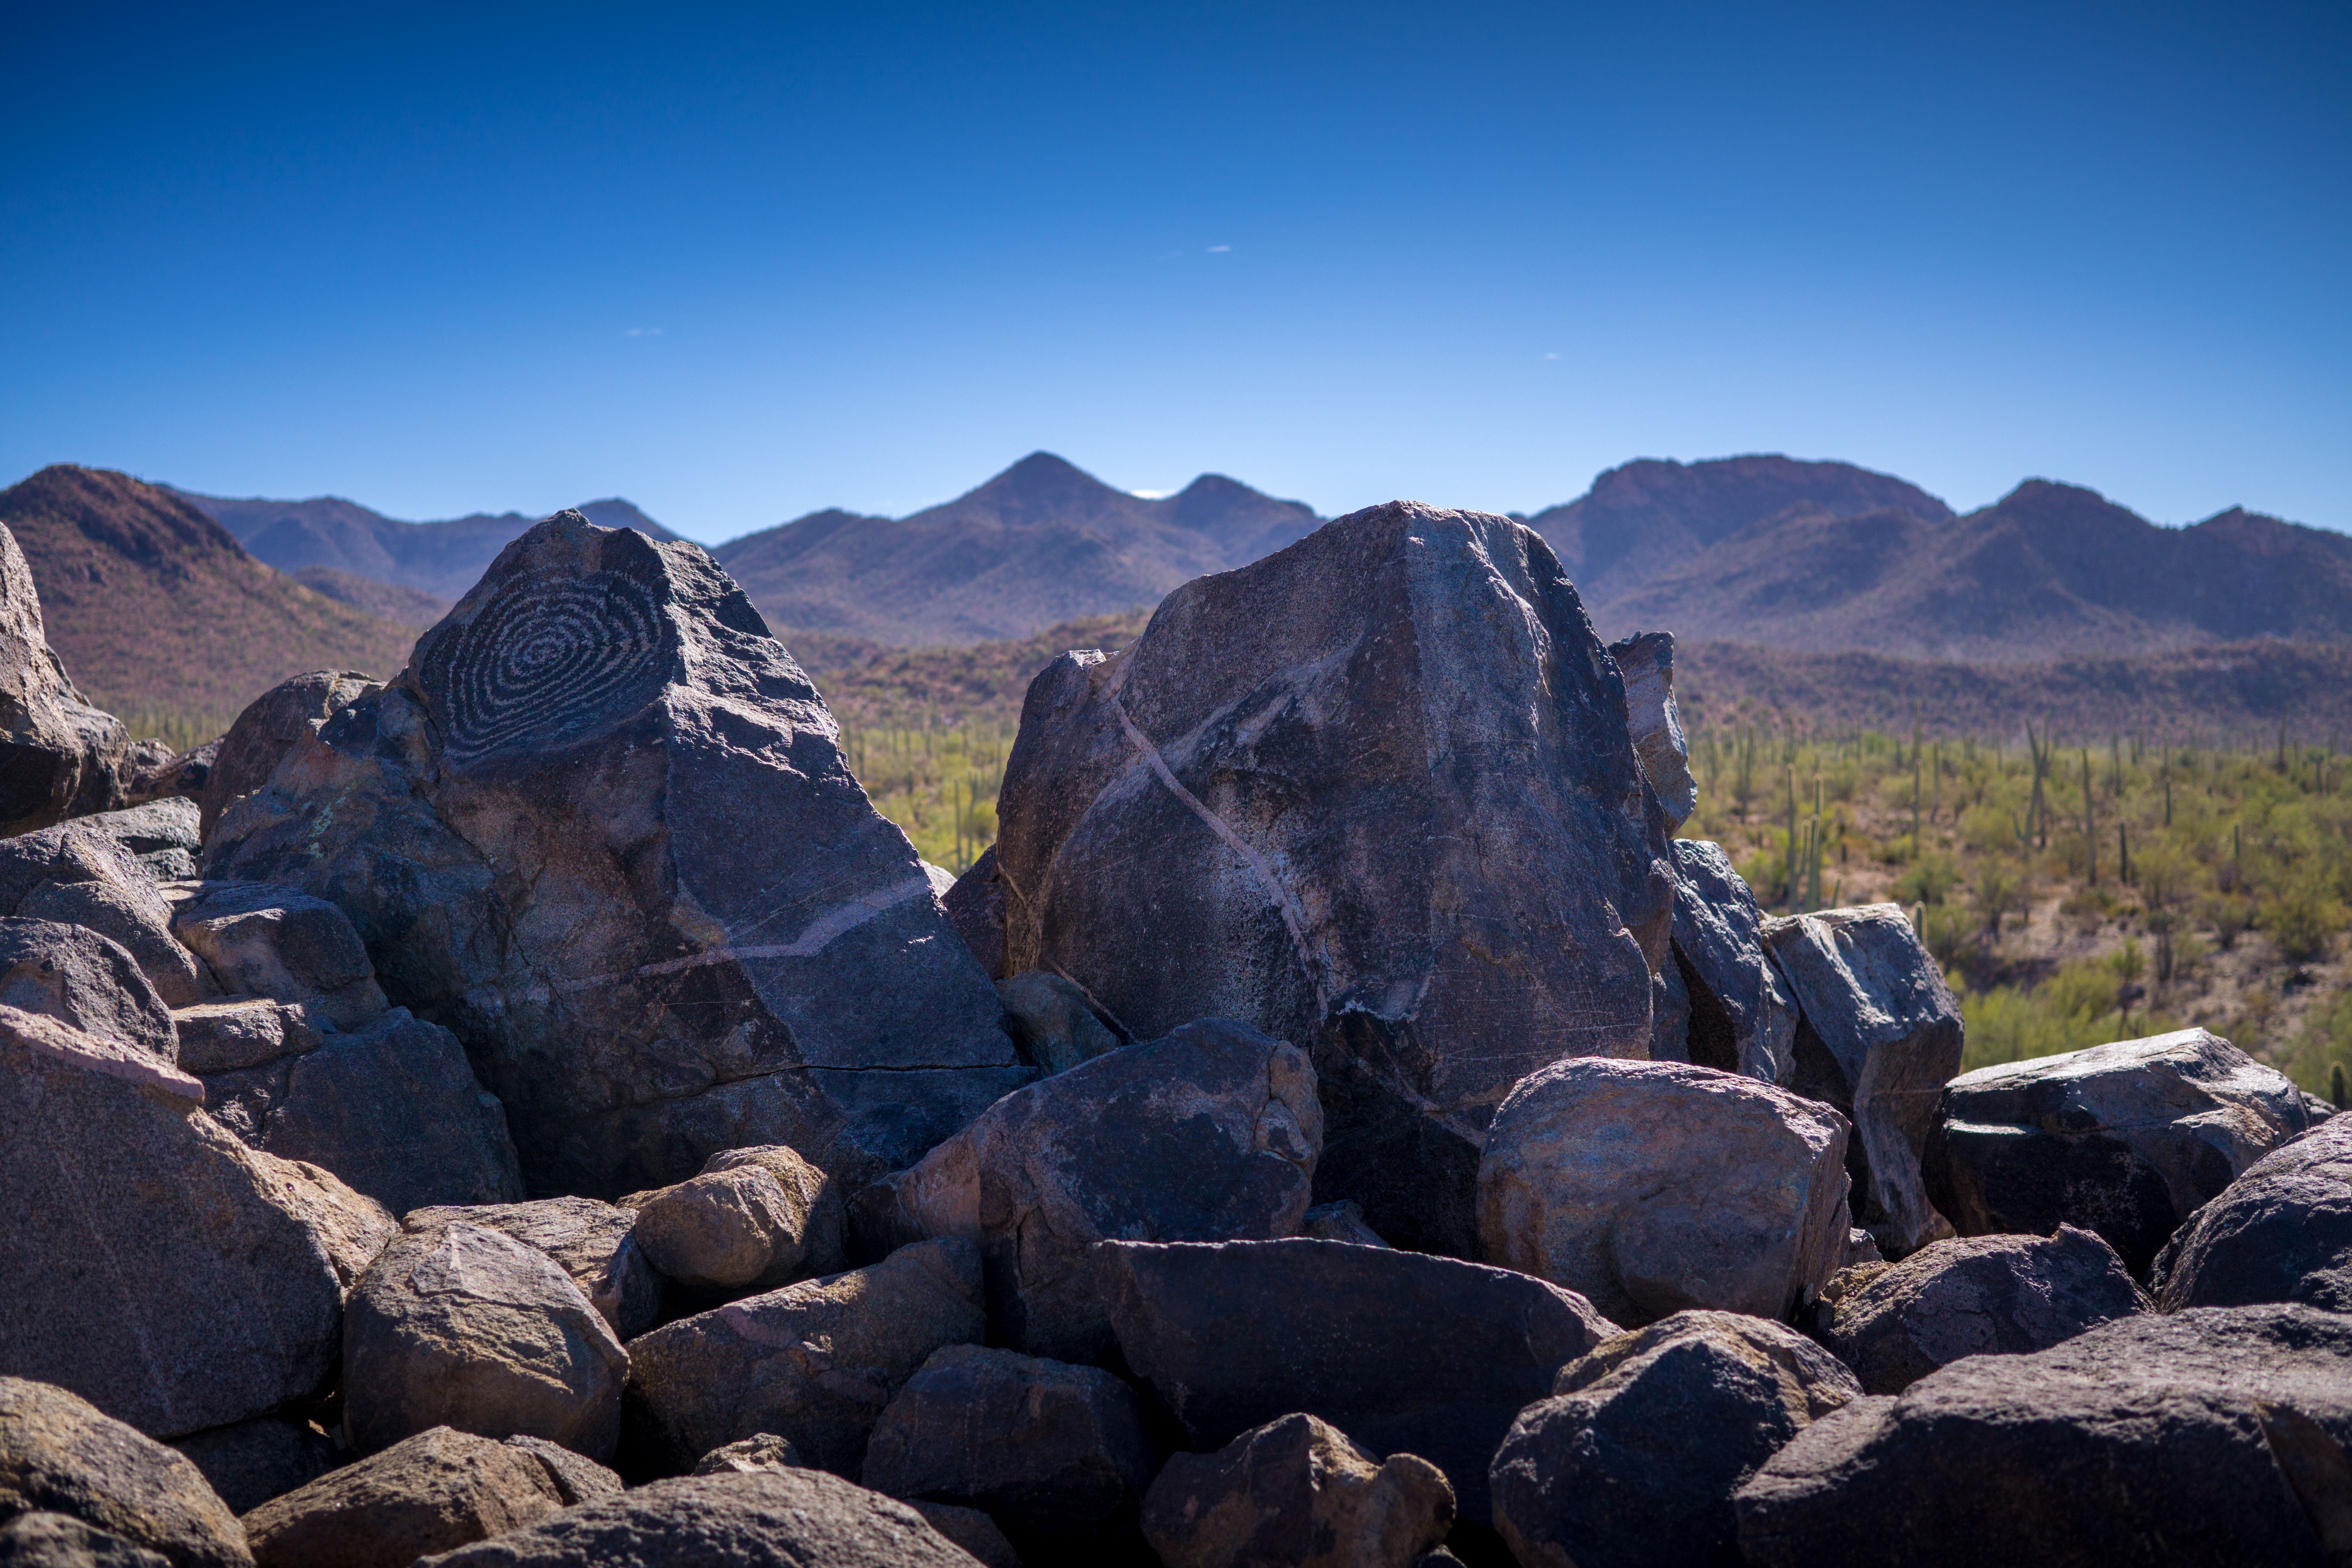 Signal Hill Petroglyphs in Saguaro National Park